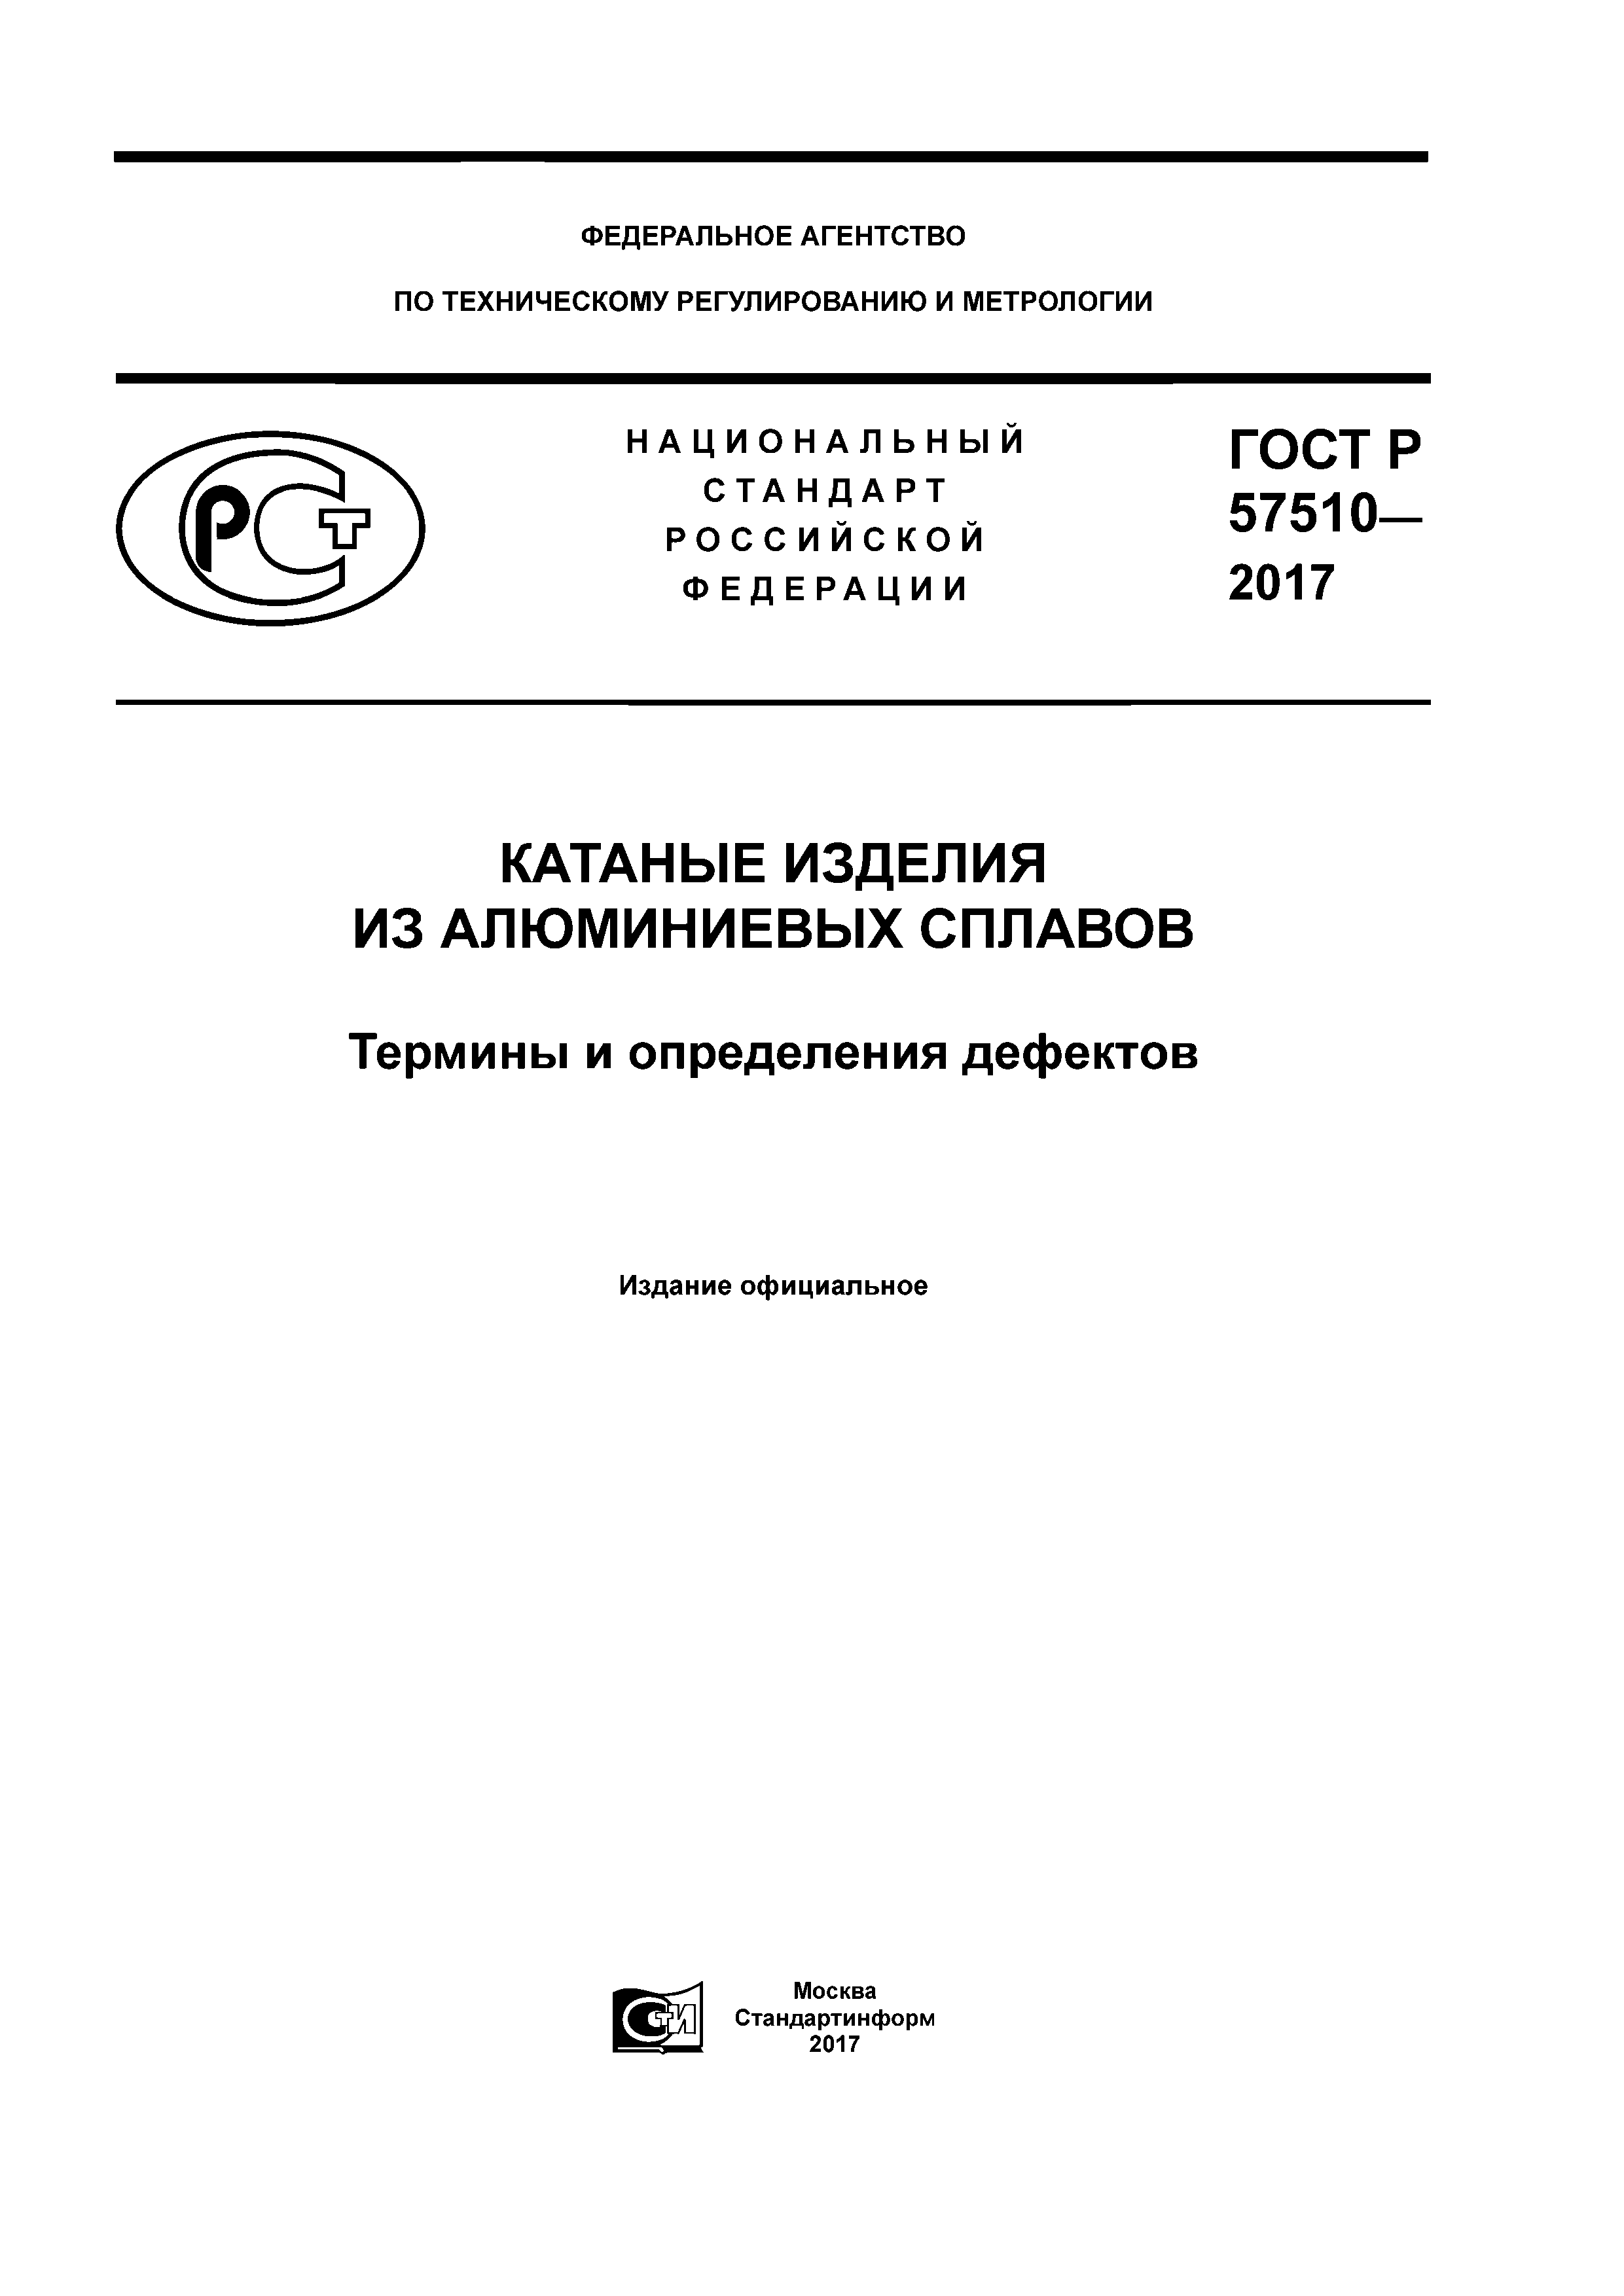 ГОСТ Р 57510-2017